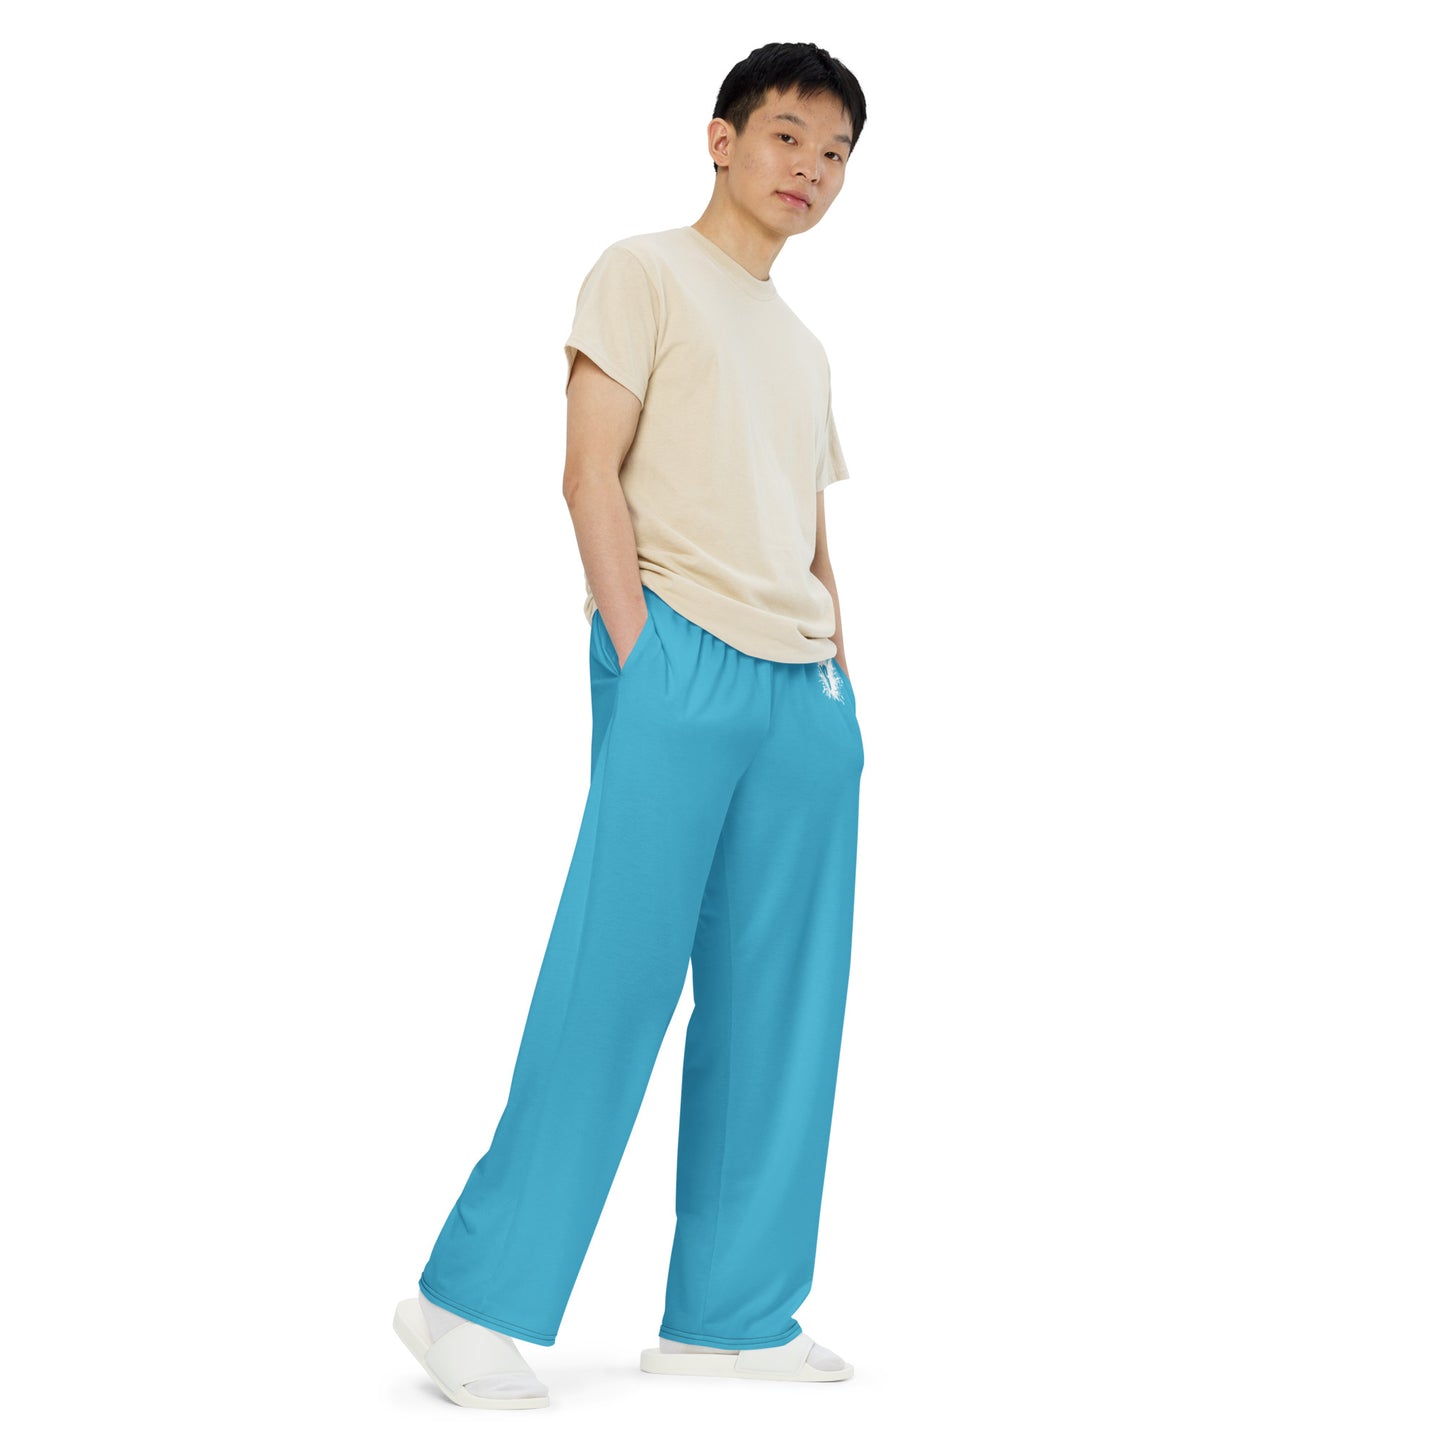 Turquoise Accent wide-leg pants